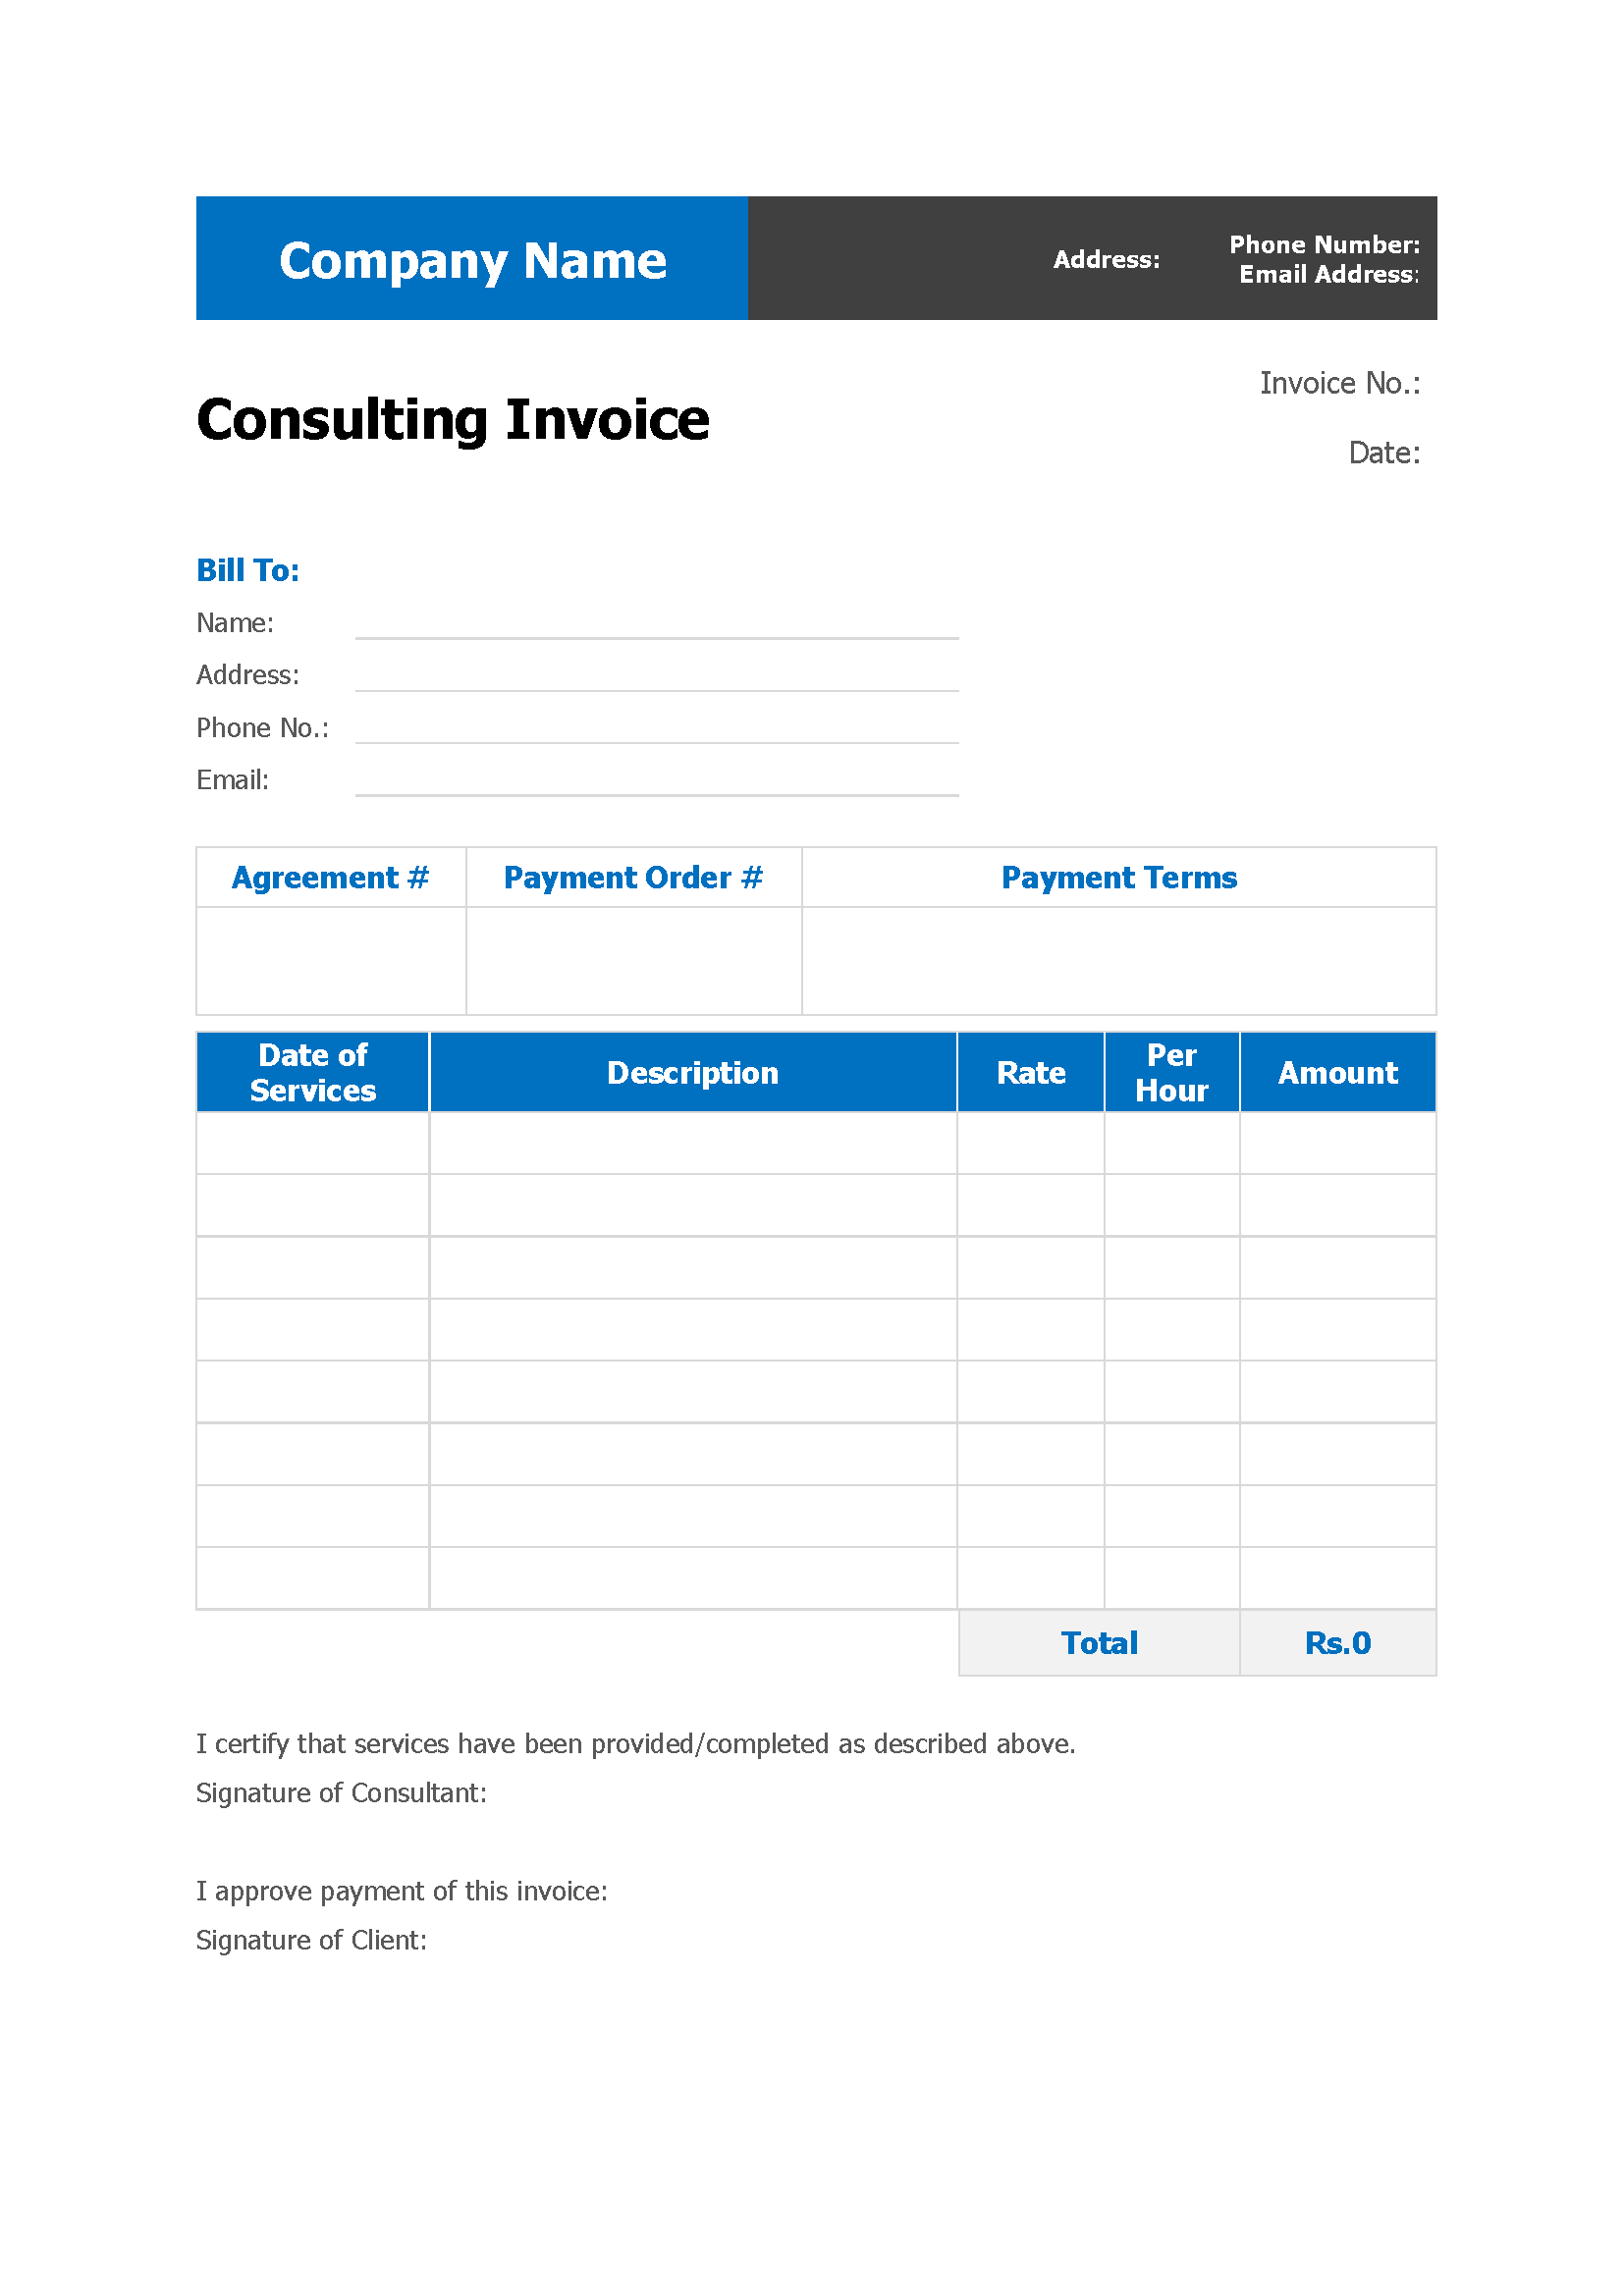 Consulting Invoice